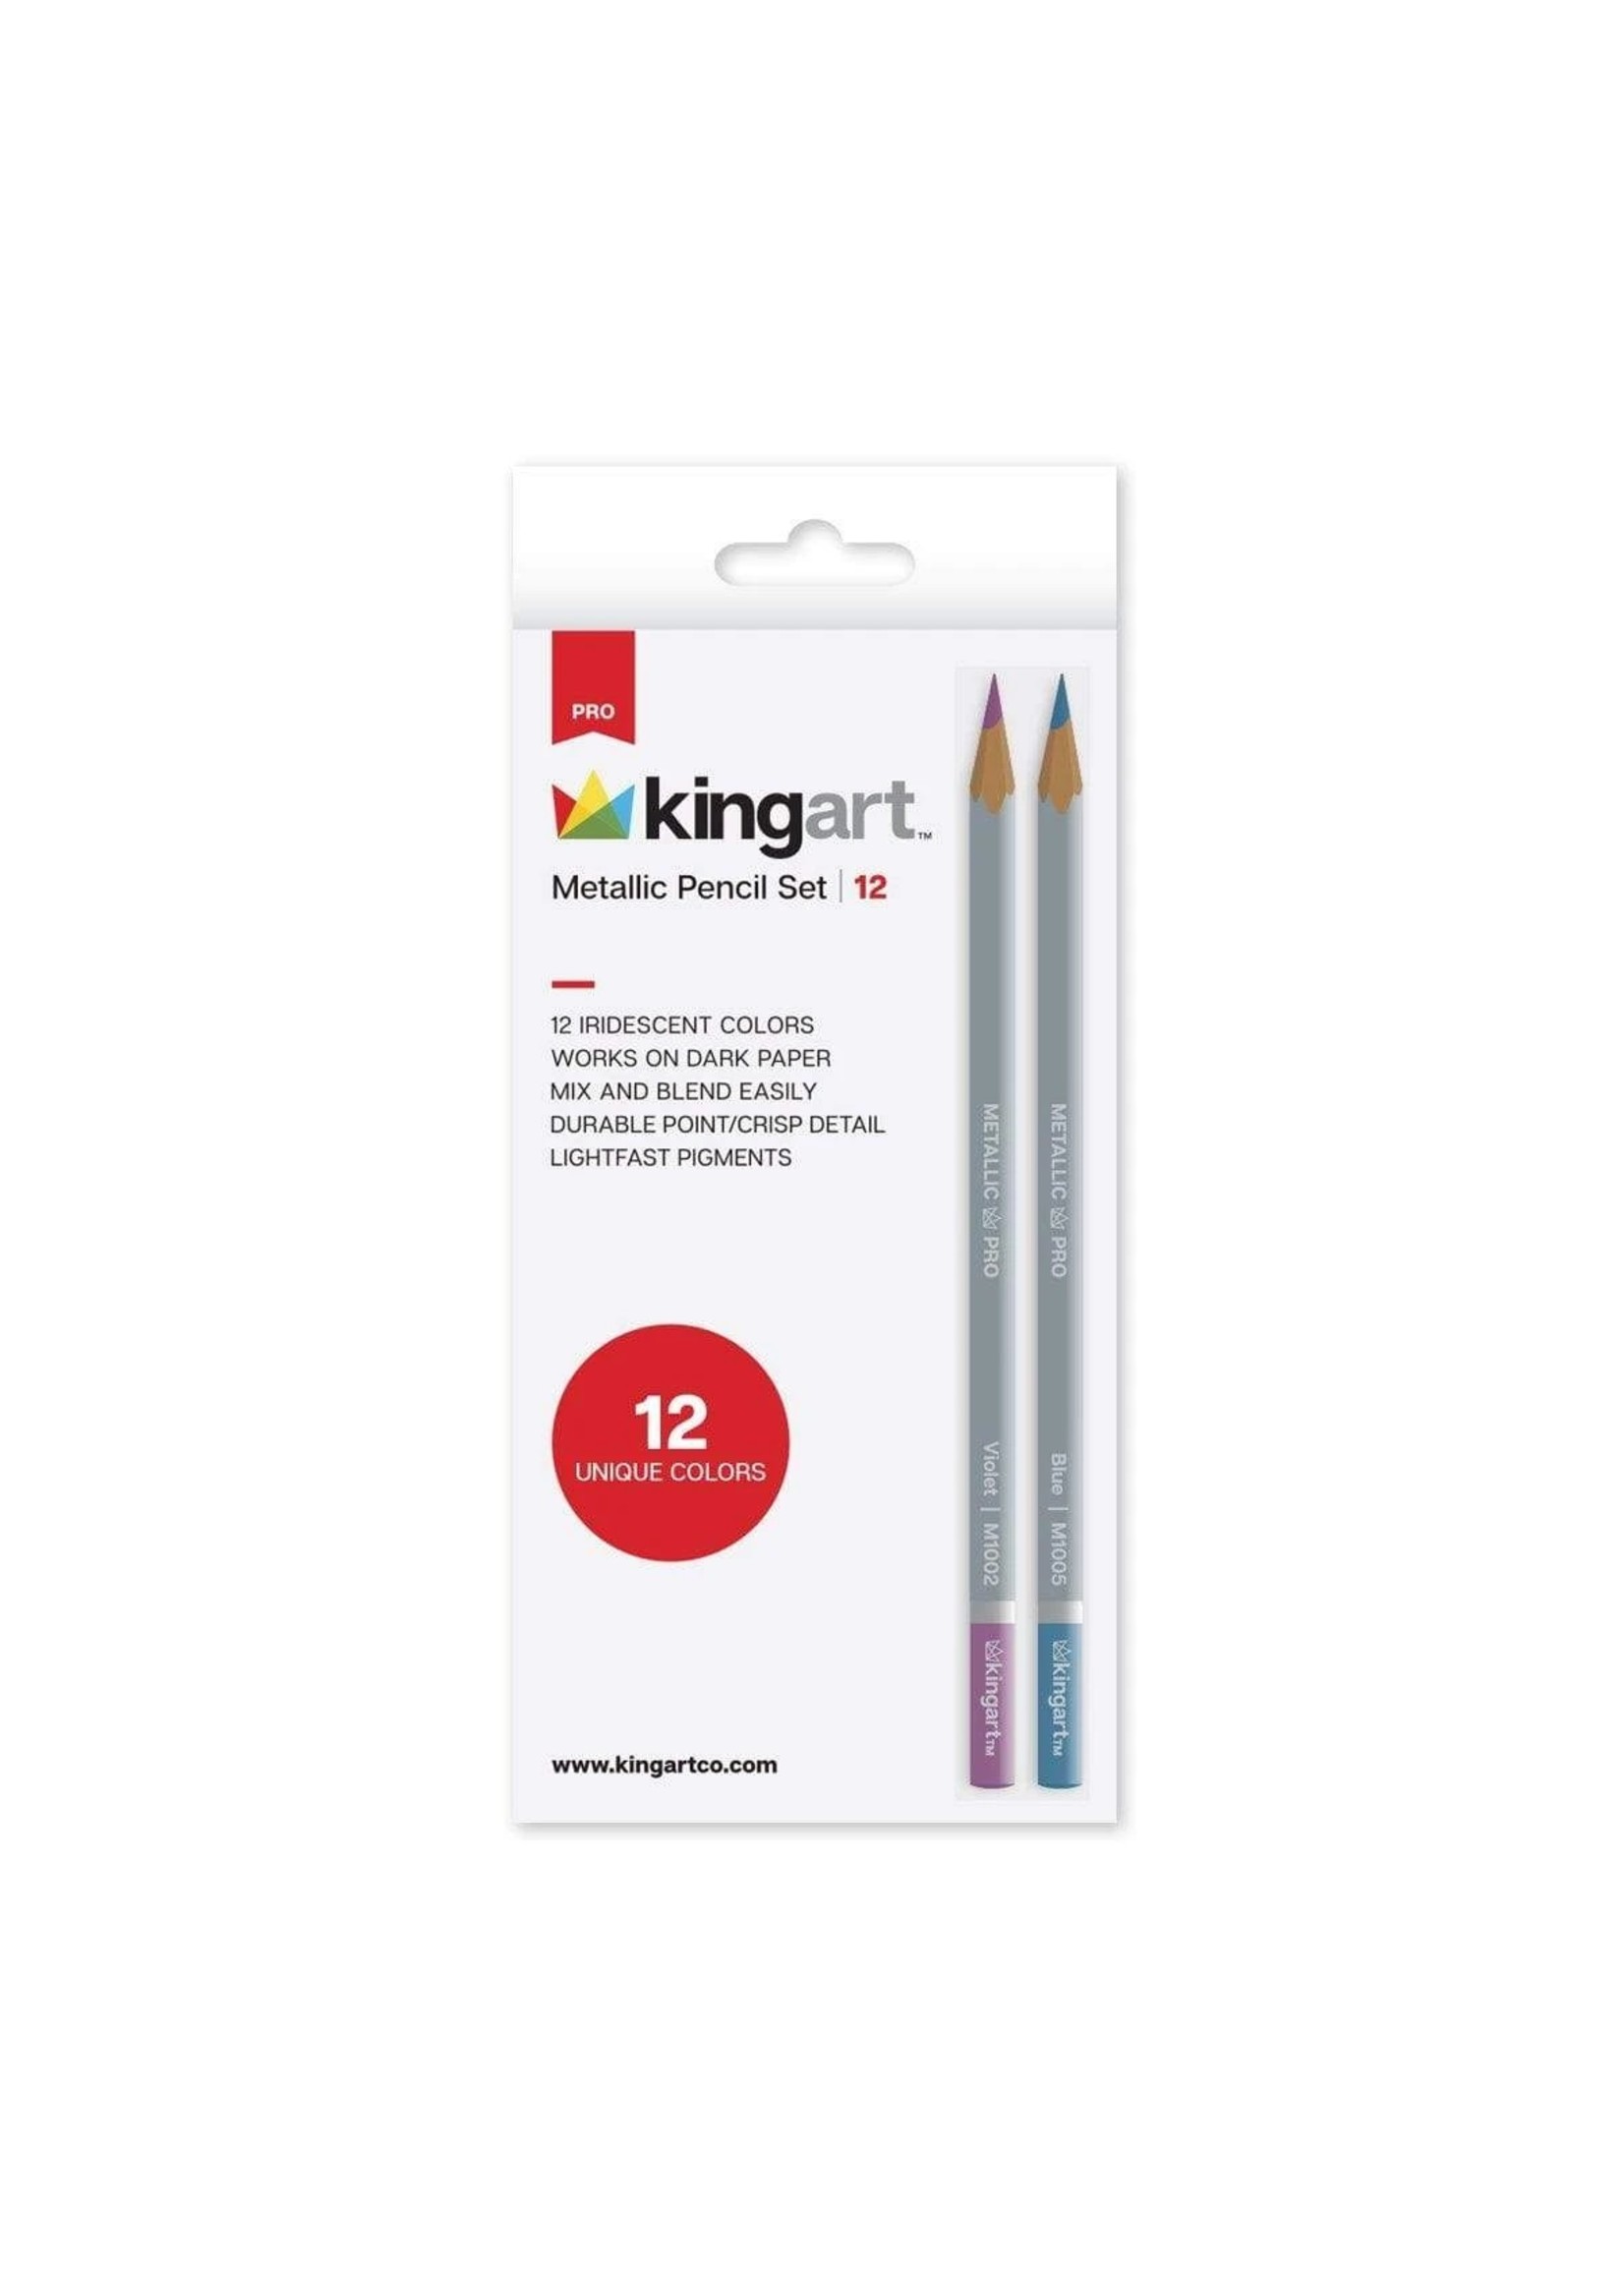 Kingart Metallic Colored Pencils in Tin - 12 Unique Colors